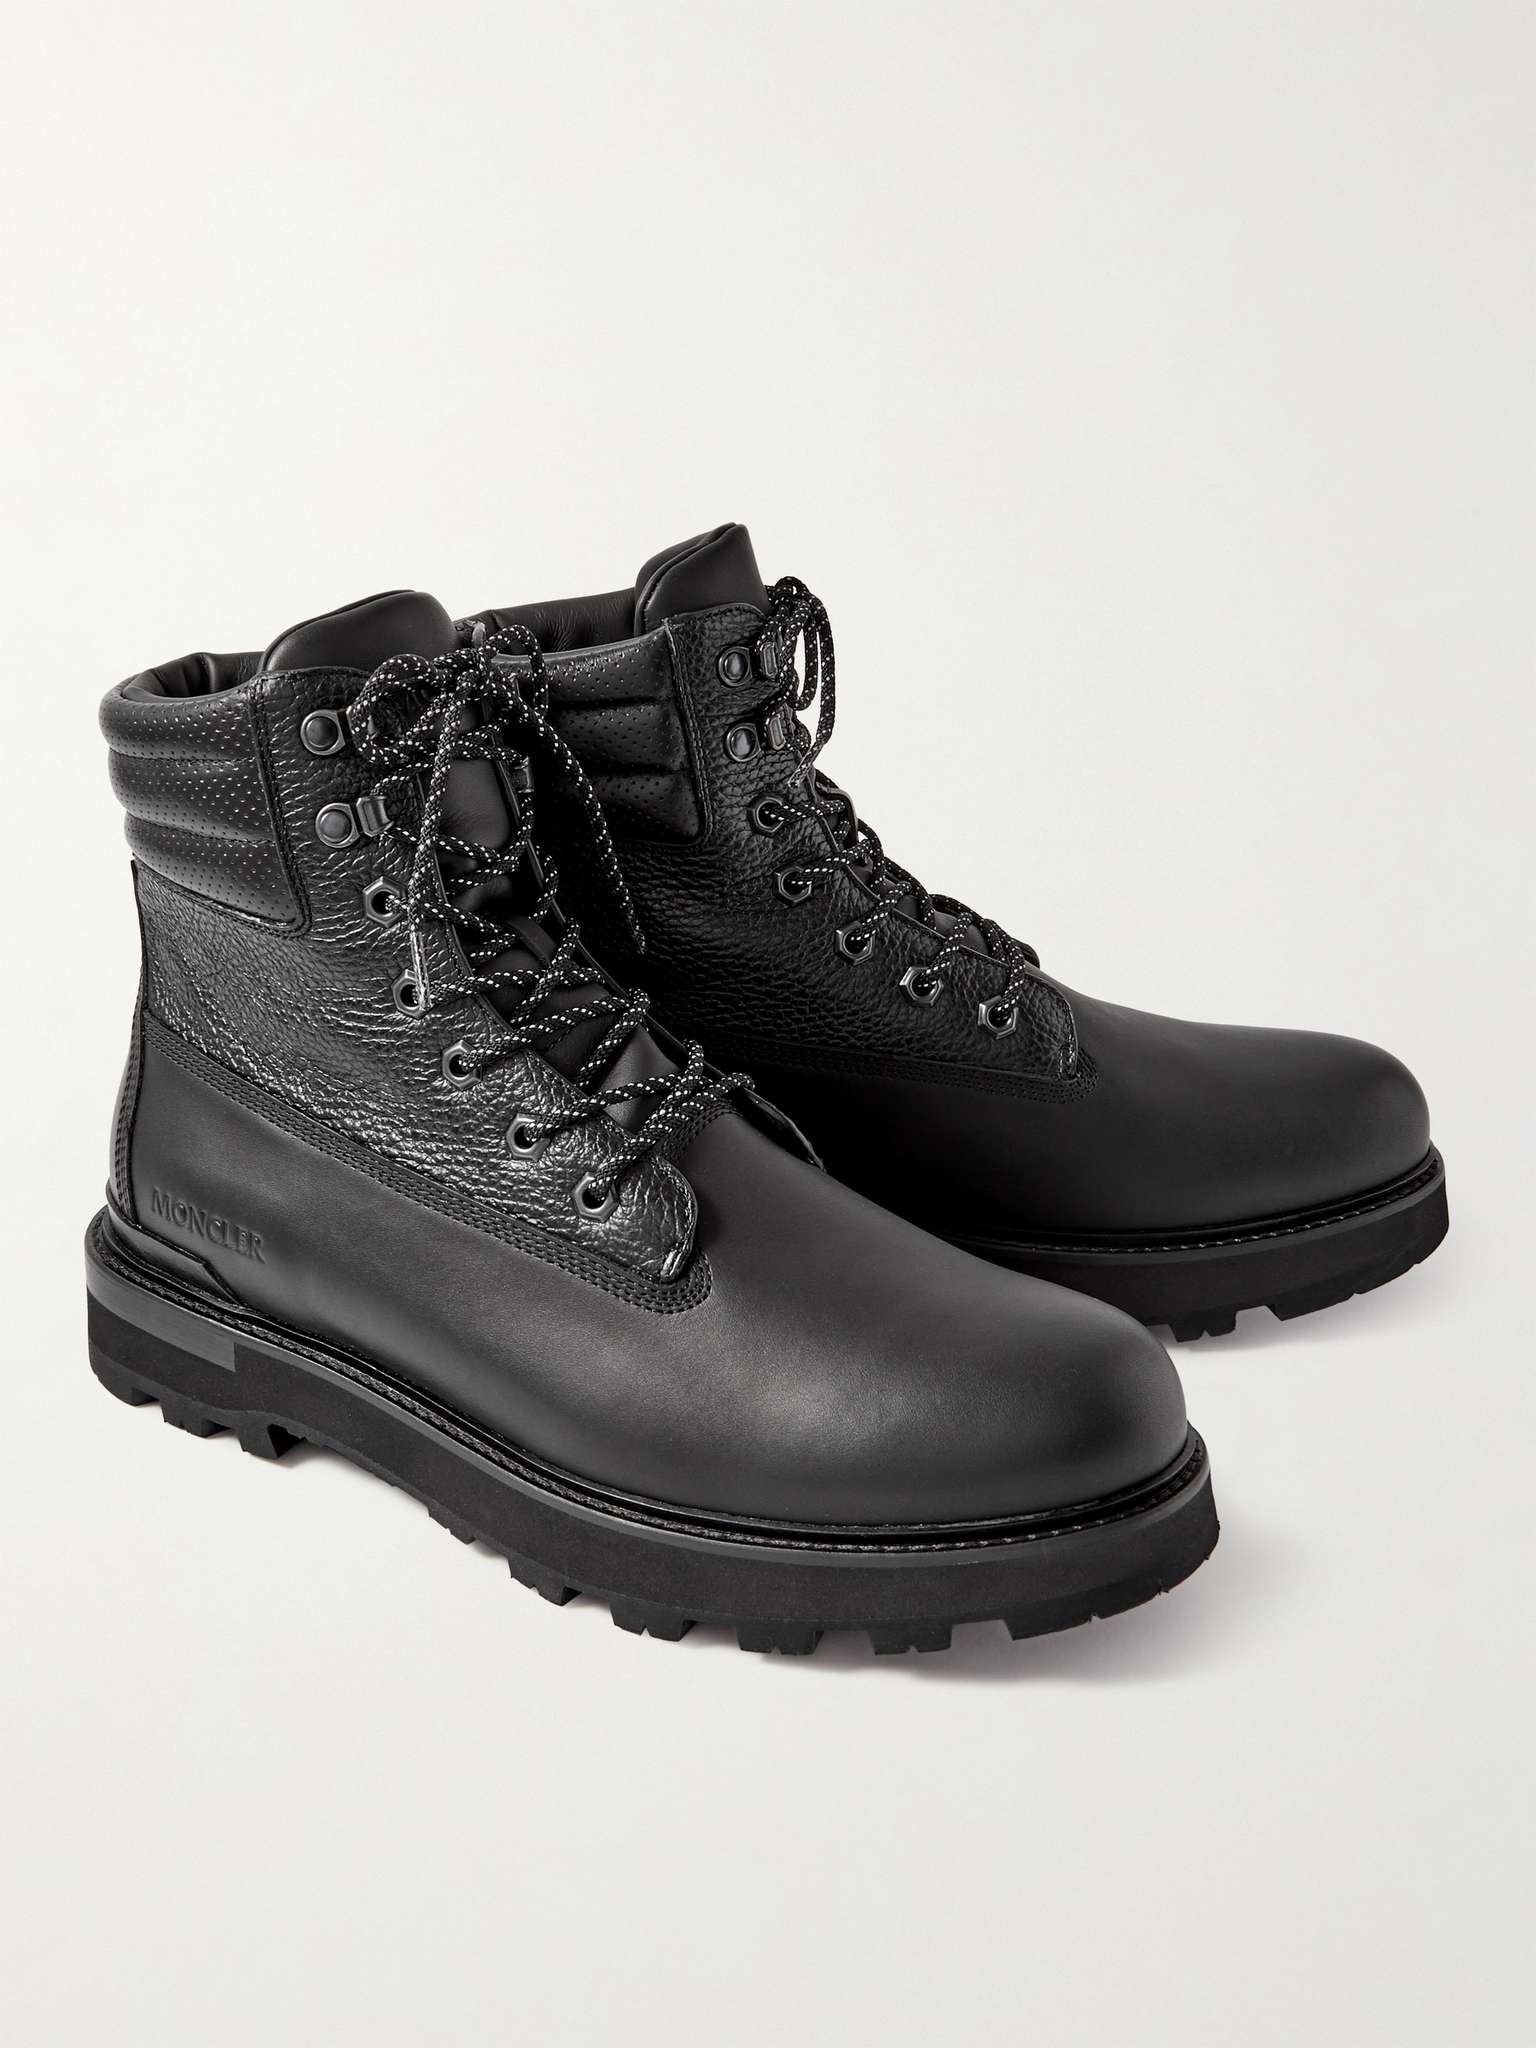 Peka Trek Leather Hiking Boots - 4